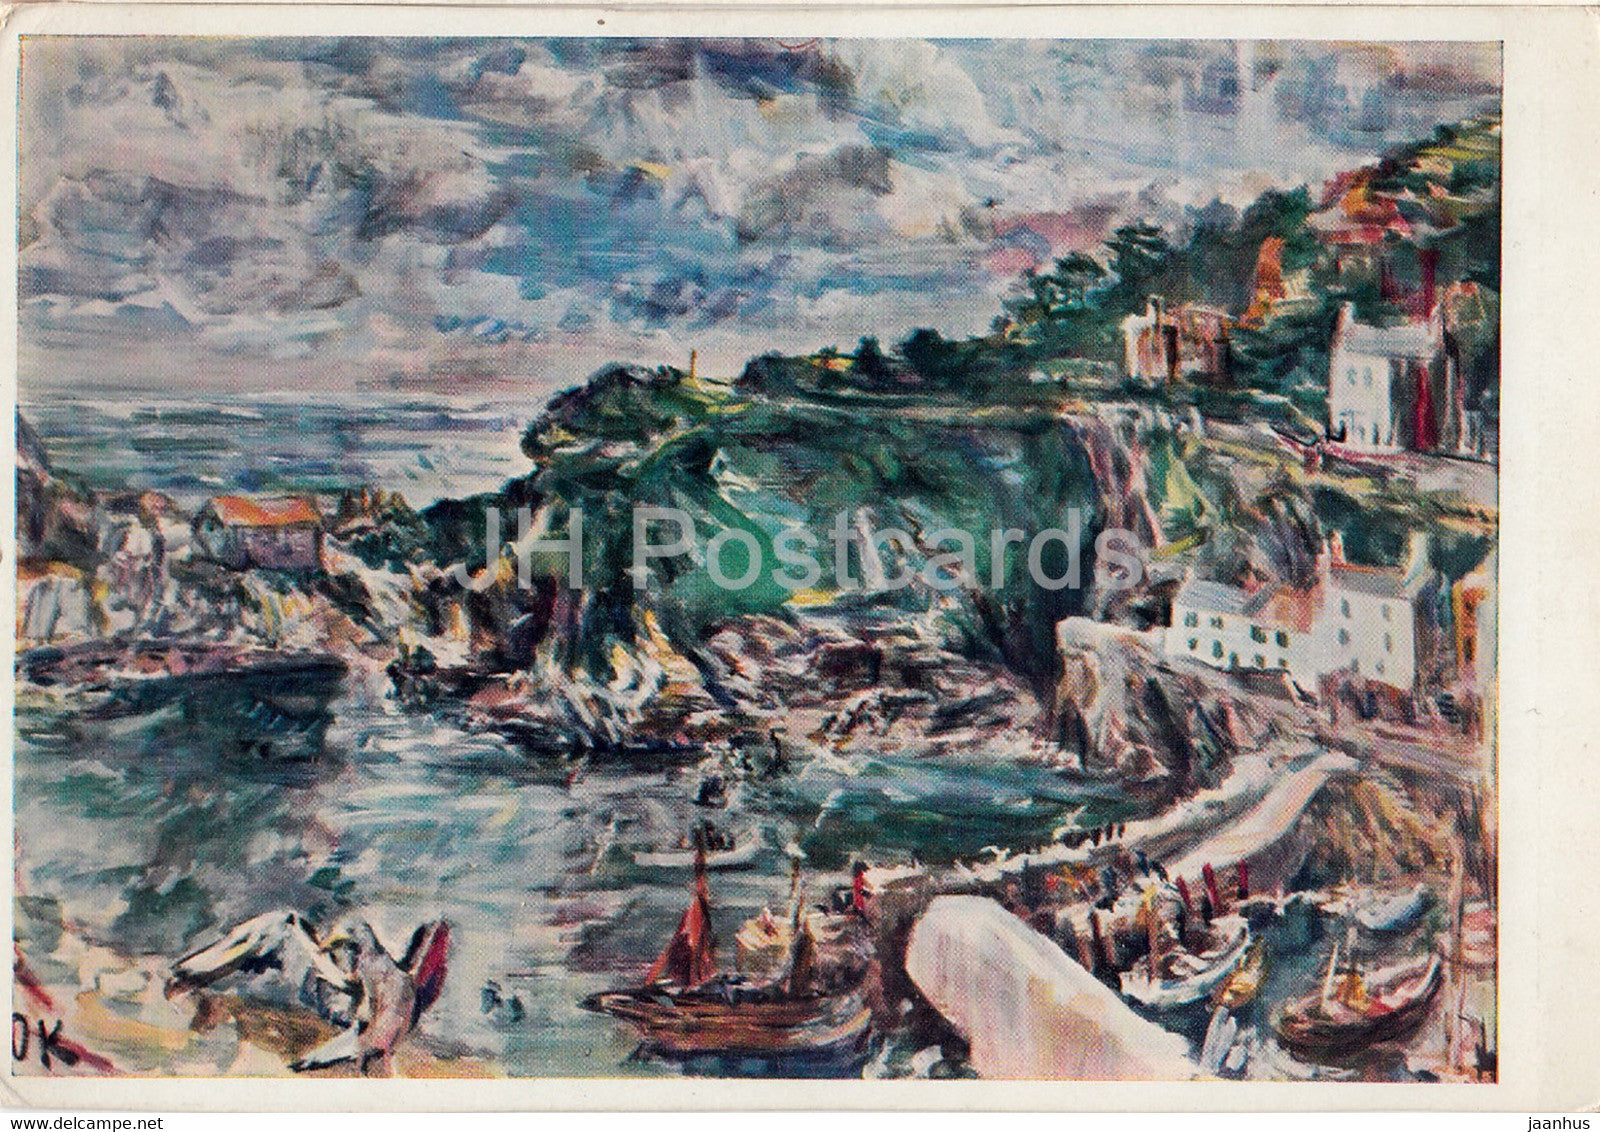 painting by Oskar Kokoschka - Polperro - Cornwall - 893 - Austrian art - Germany - unused - JH Postcards